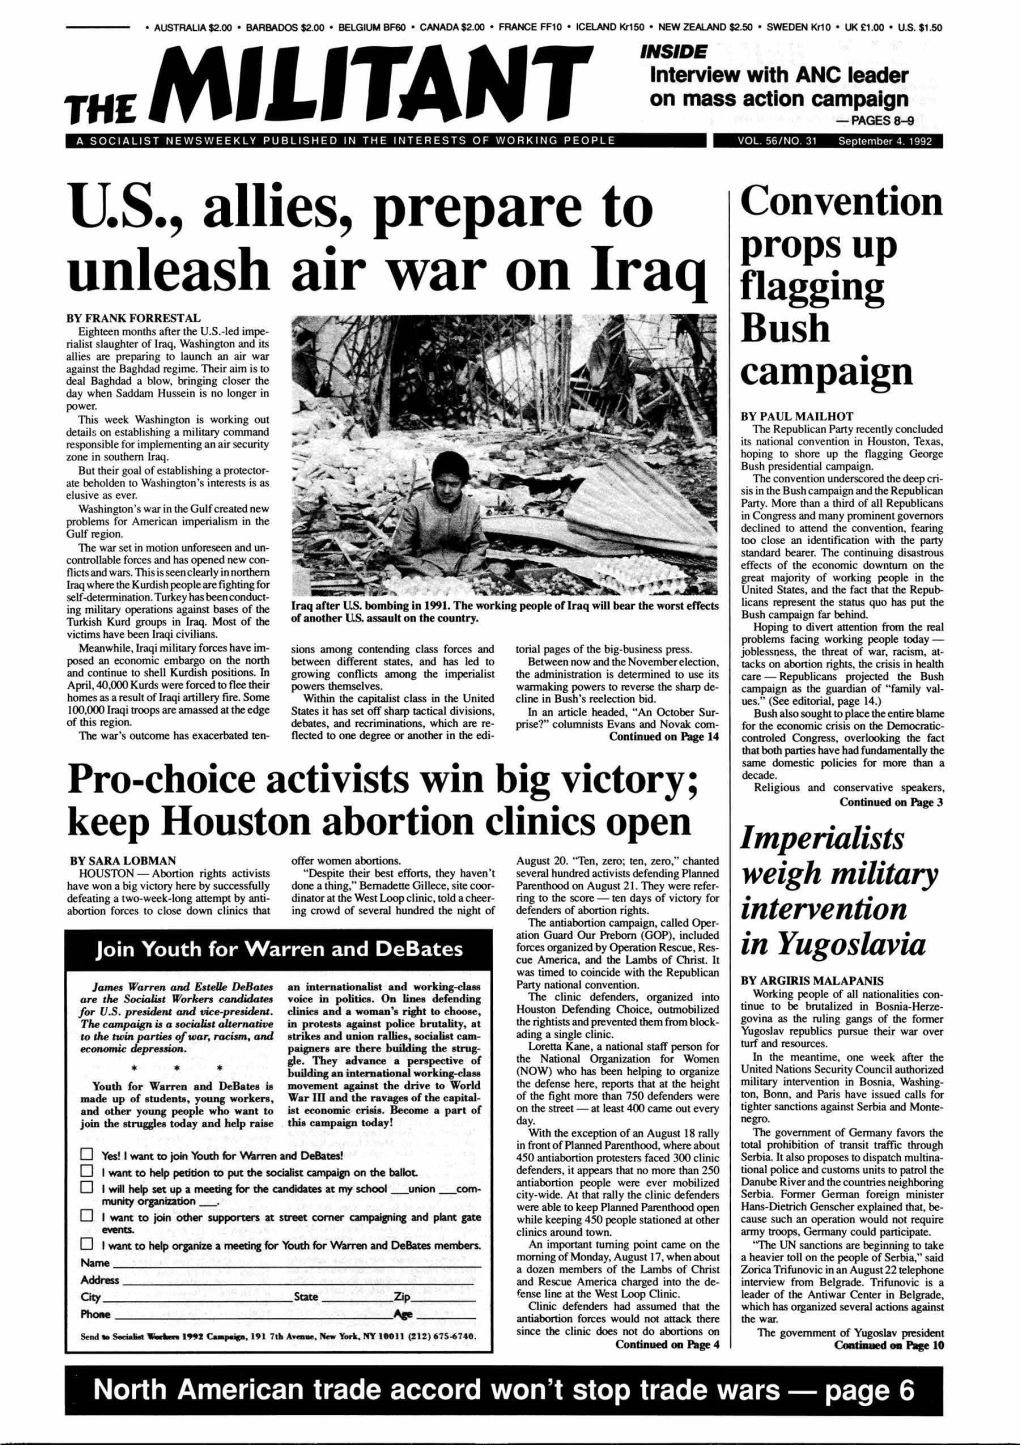 US, Allies, Prepare to Unleash Air War on Iraq